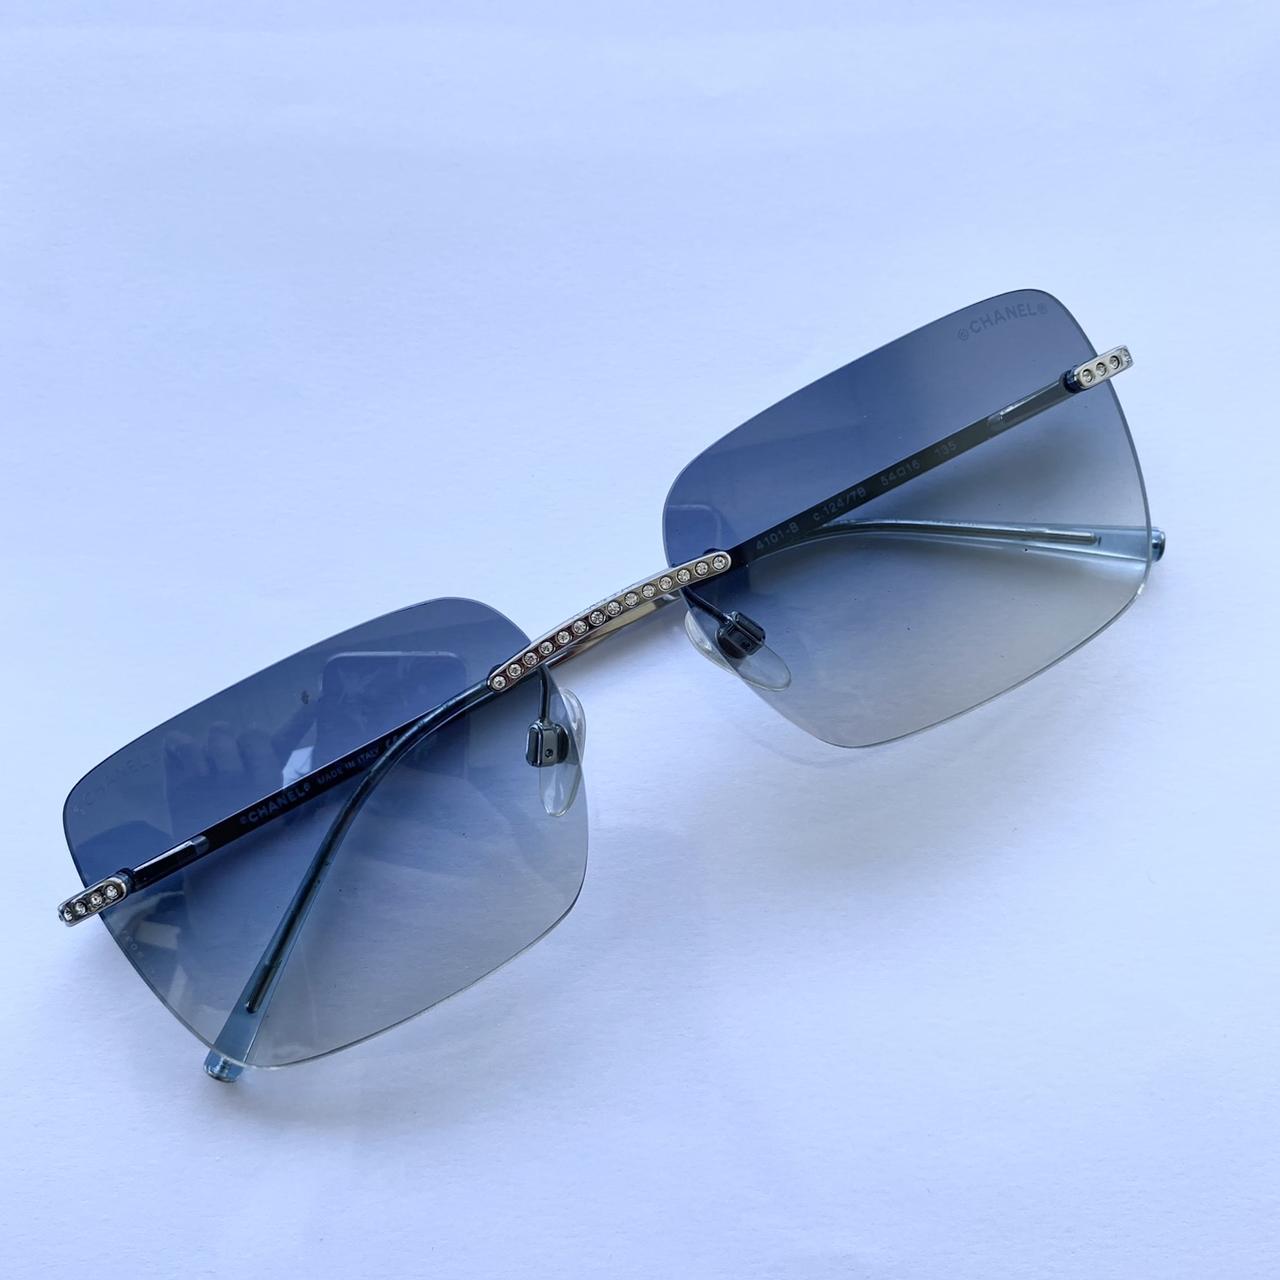 Vintage rimless CHANEL sunglasses Real ! Very good - Depop